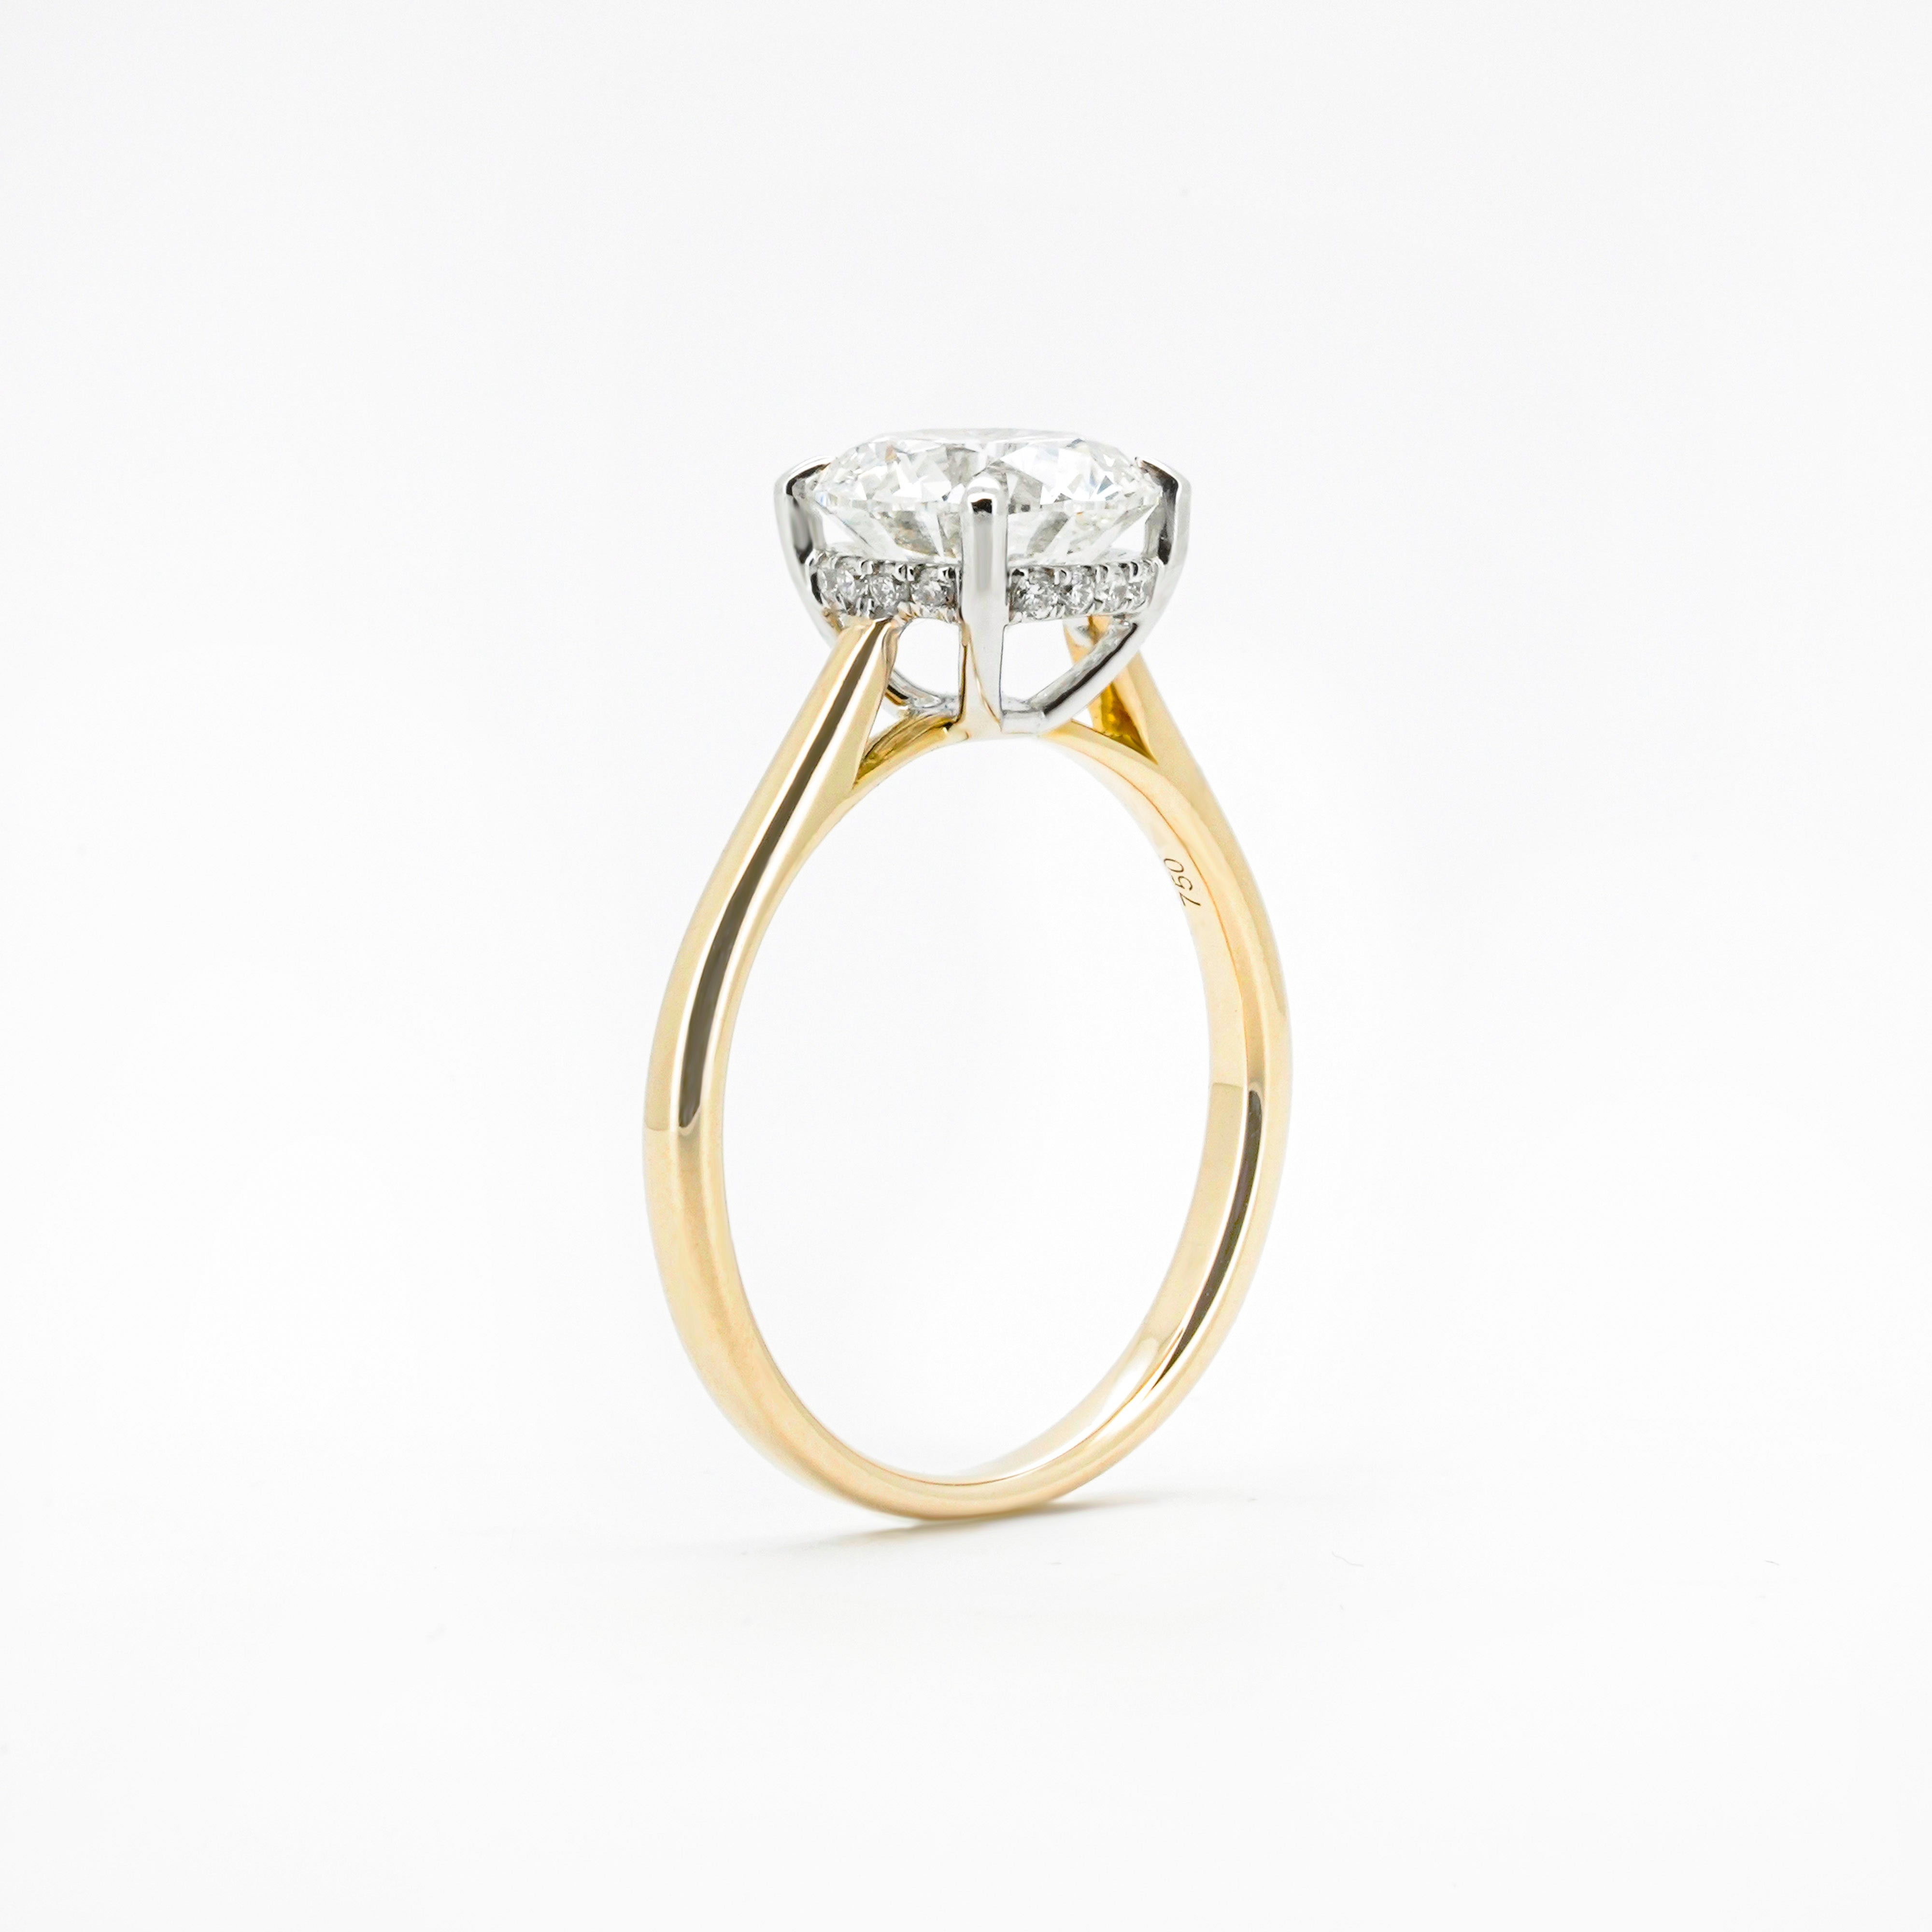 Round Diamond Ring with Hidden Halo | Sol et Terre